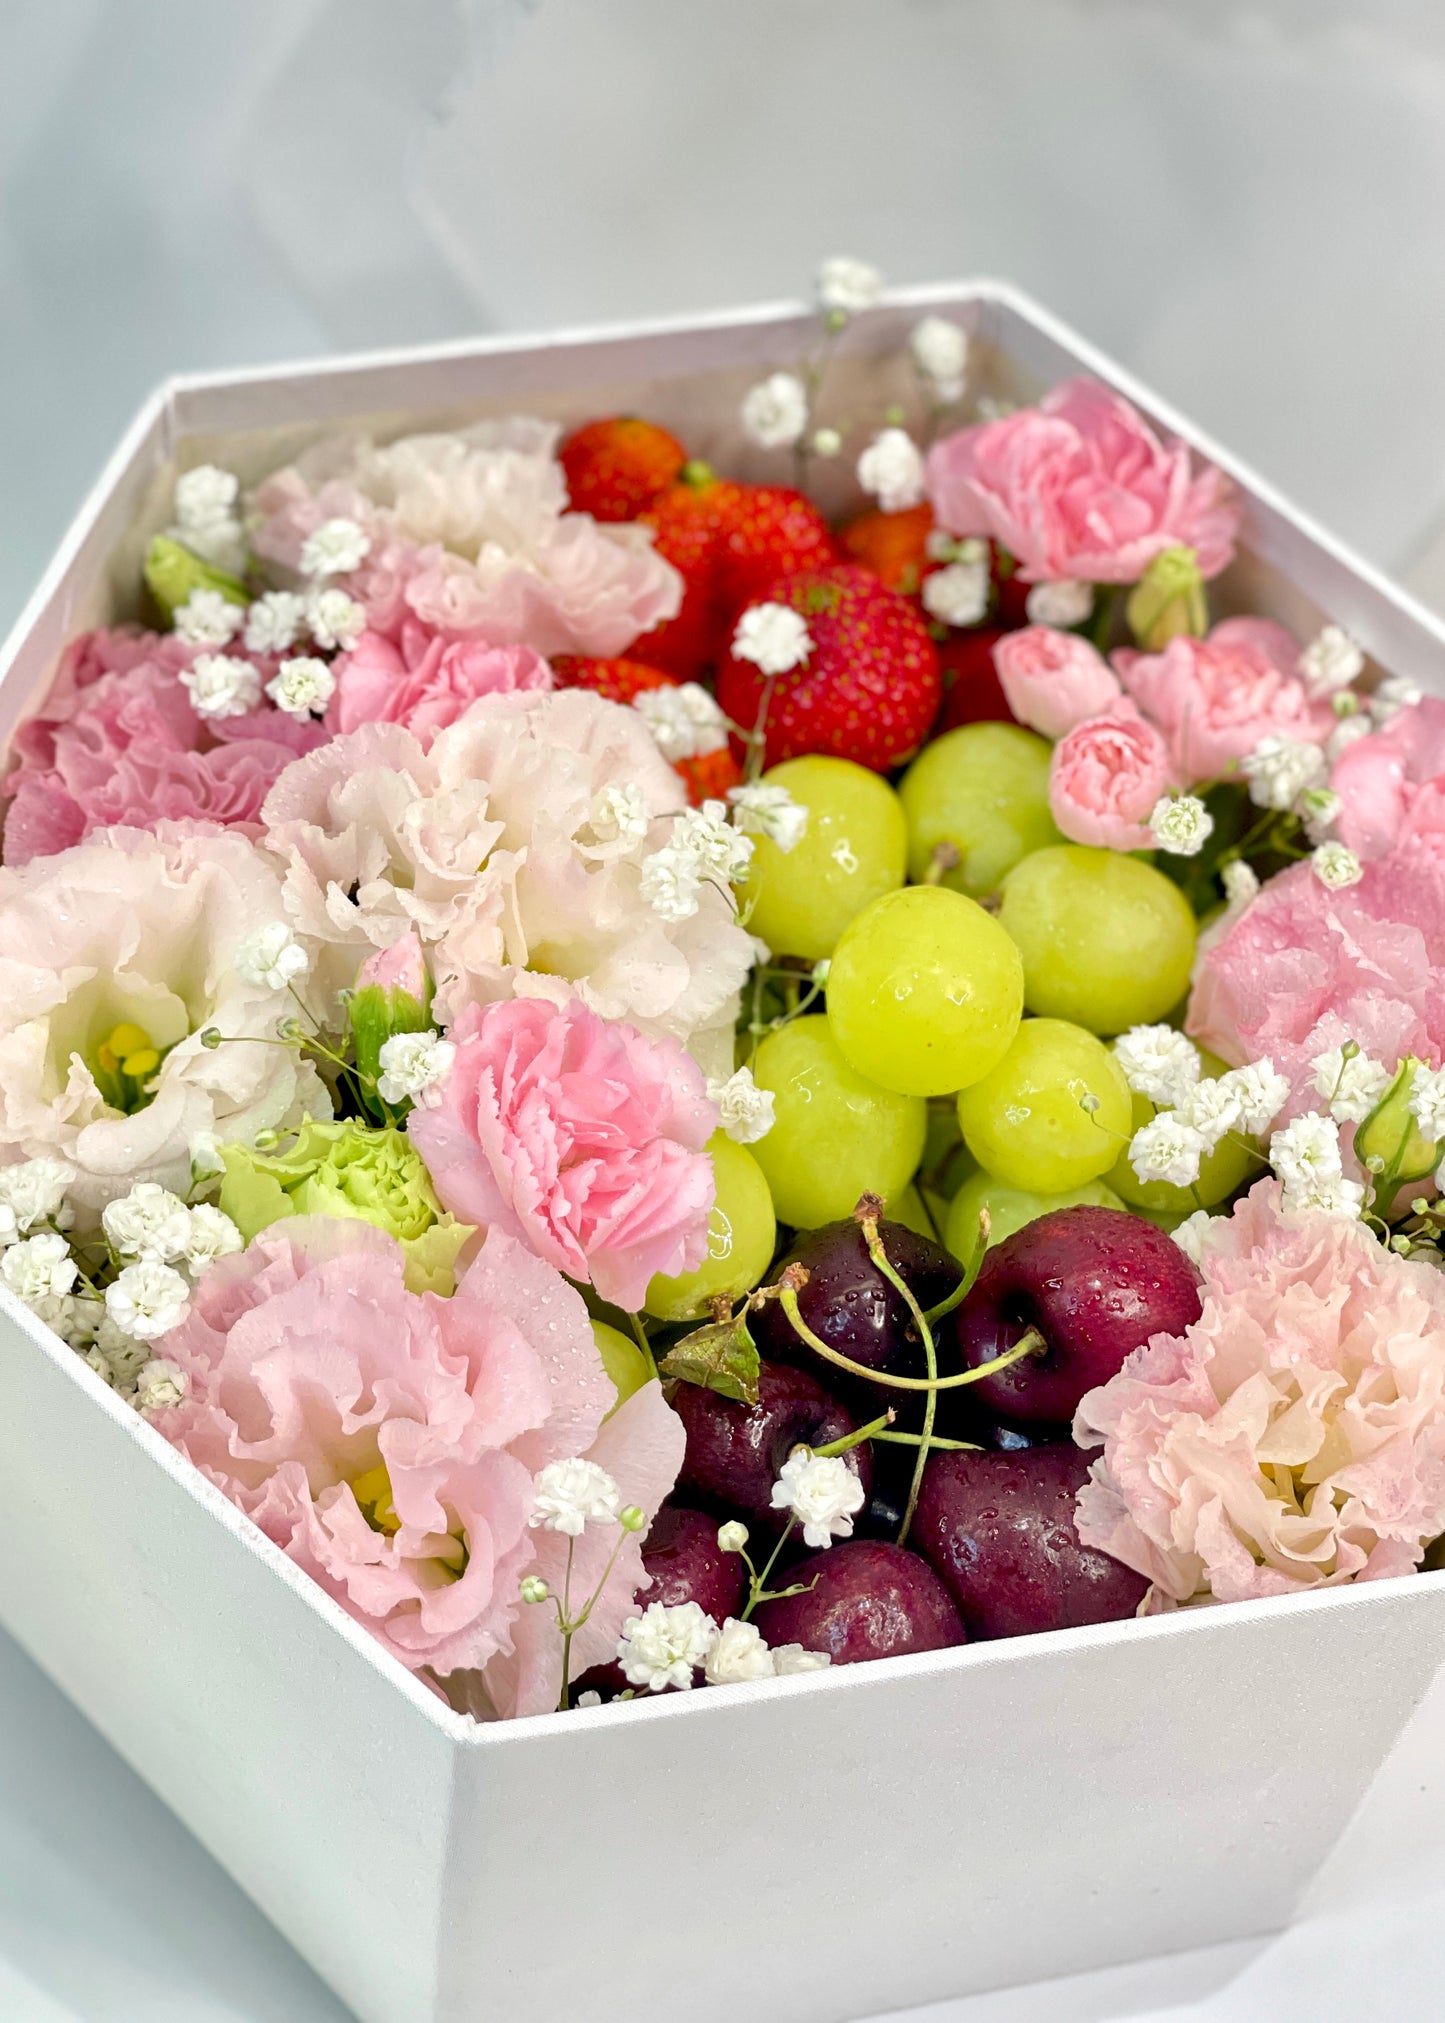 Tiffany's Fruit Box | Fruit Box